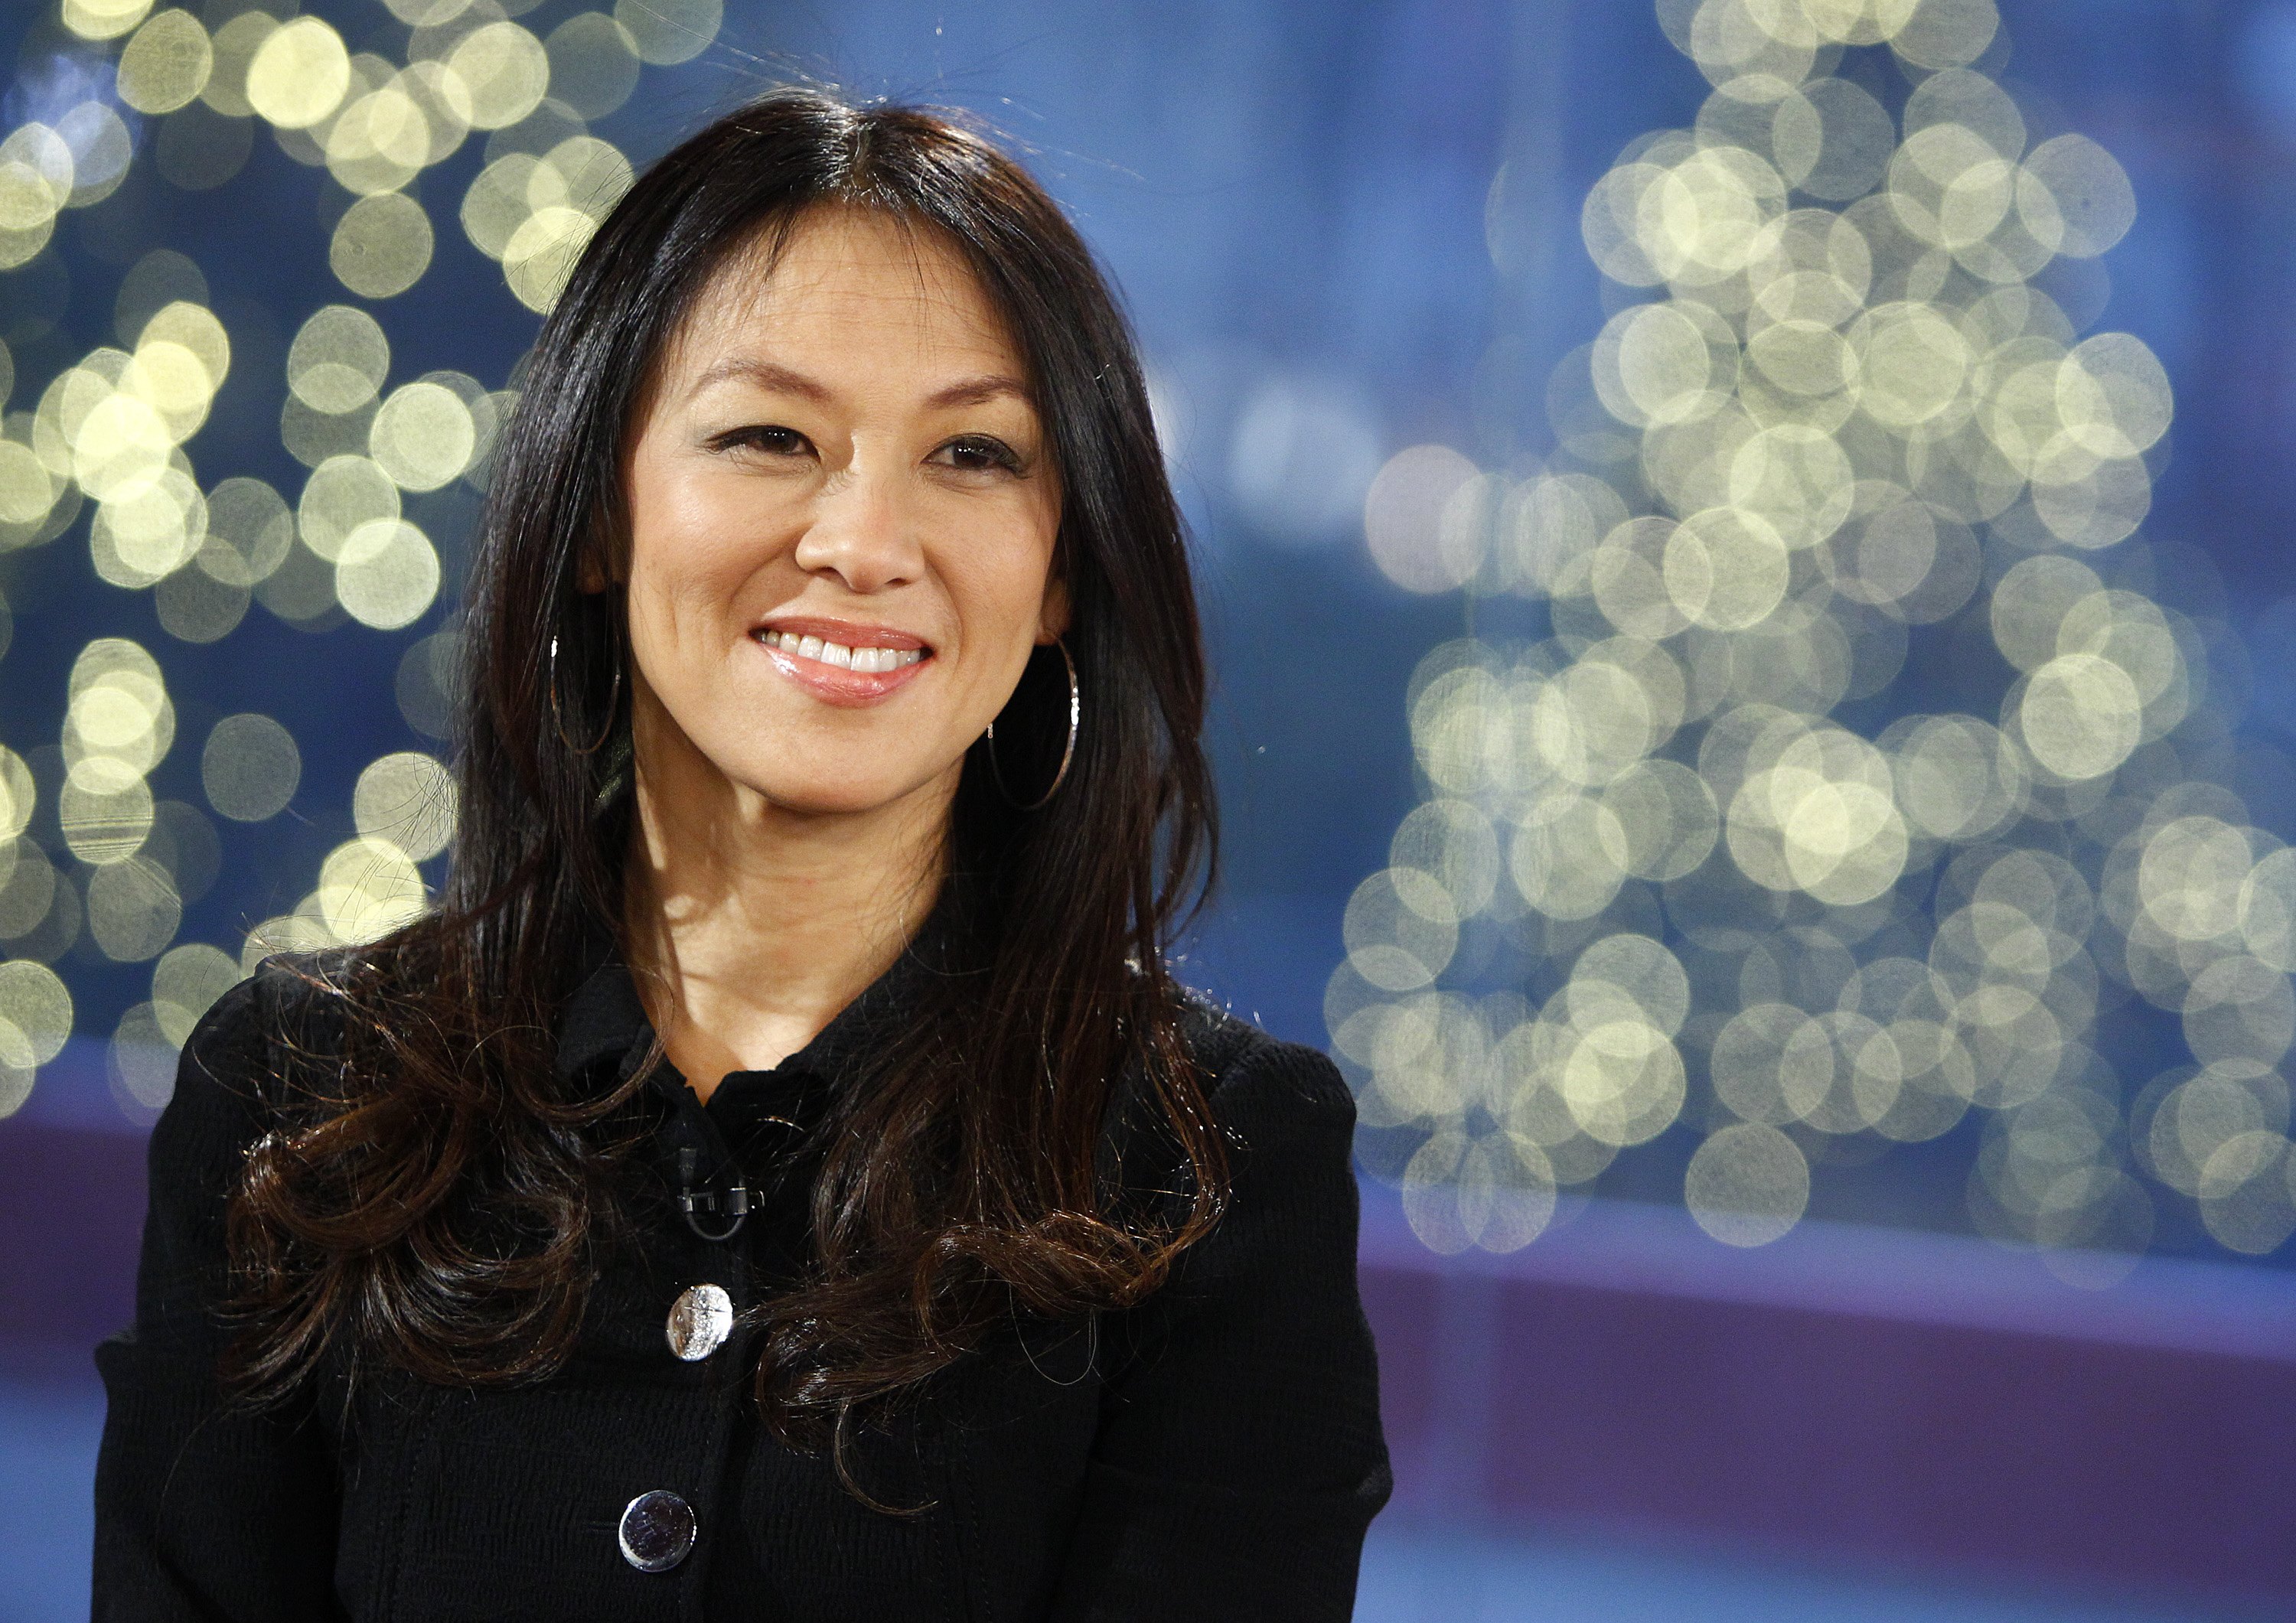 Amy Chua appears on NBC News' "Today" show. (NBC NewsWire&mdash;NBC NewsWire via Getty Images)